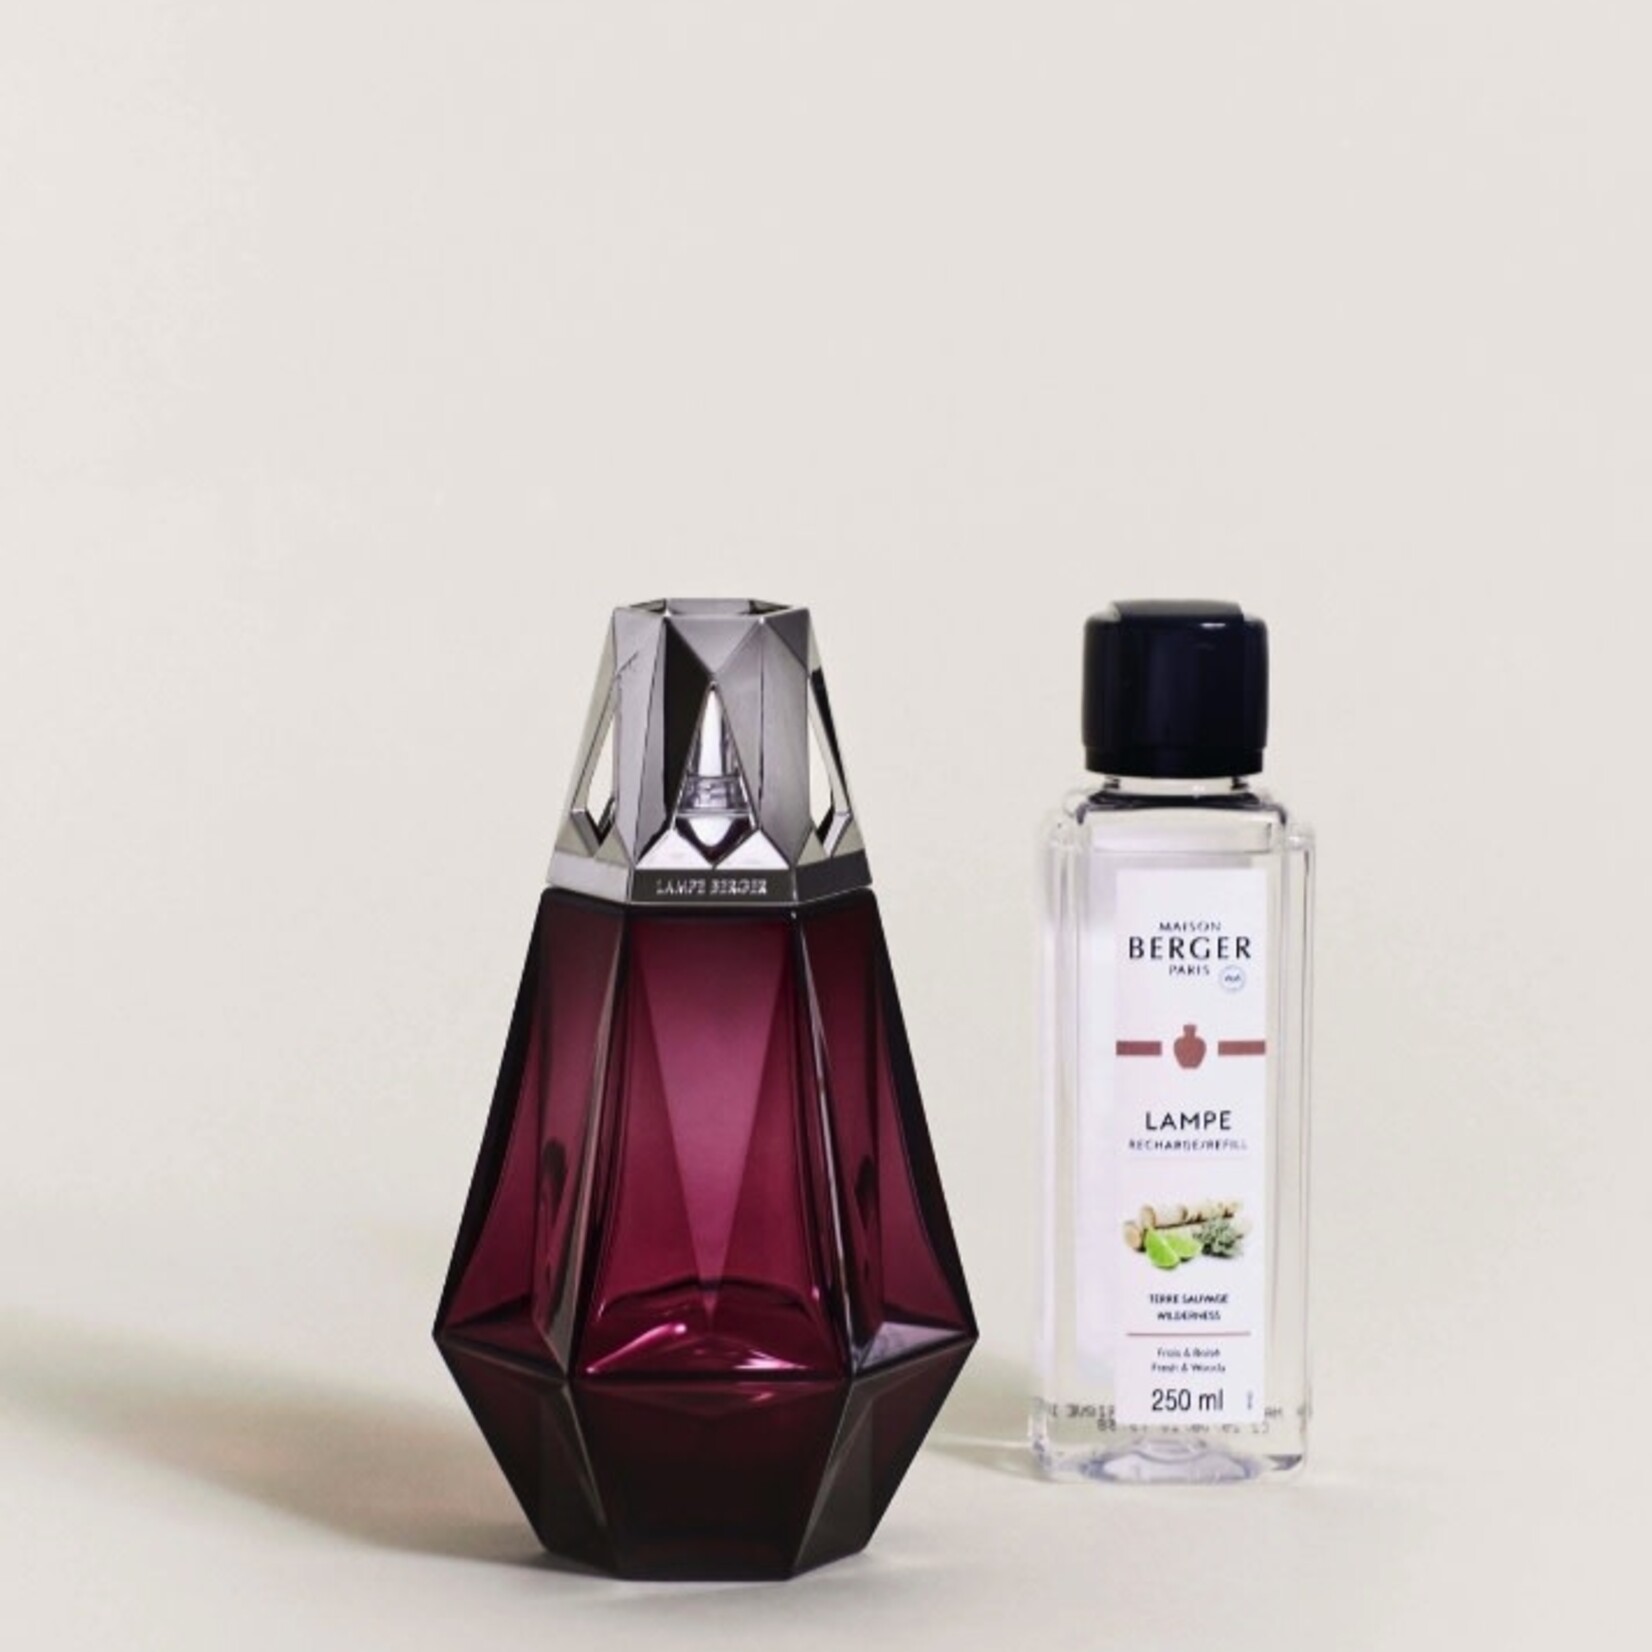 Maison Berger Paris Prisme Garnet Home Fragrance Lamp Gift Set with Wilderness